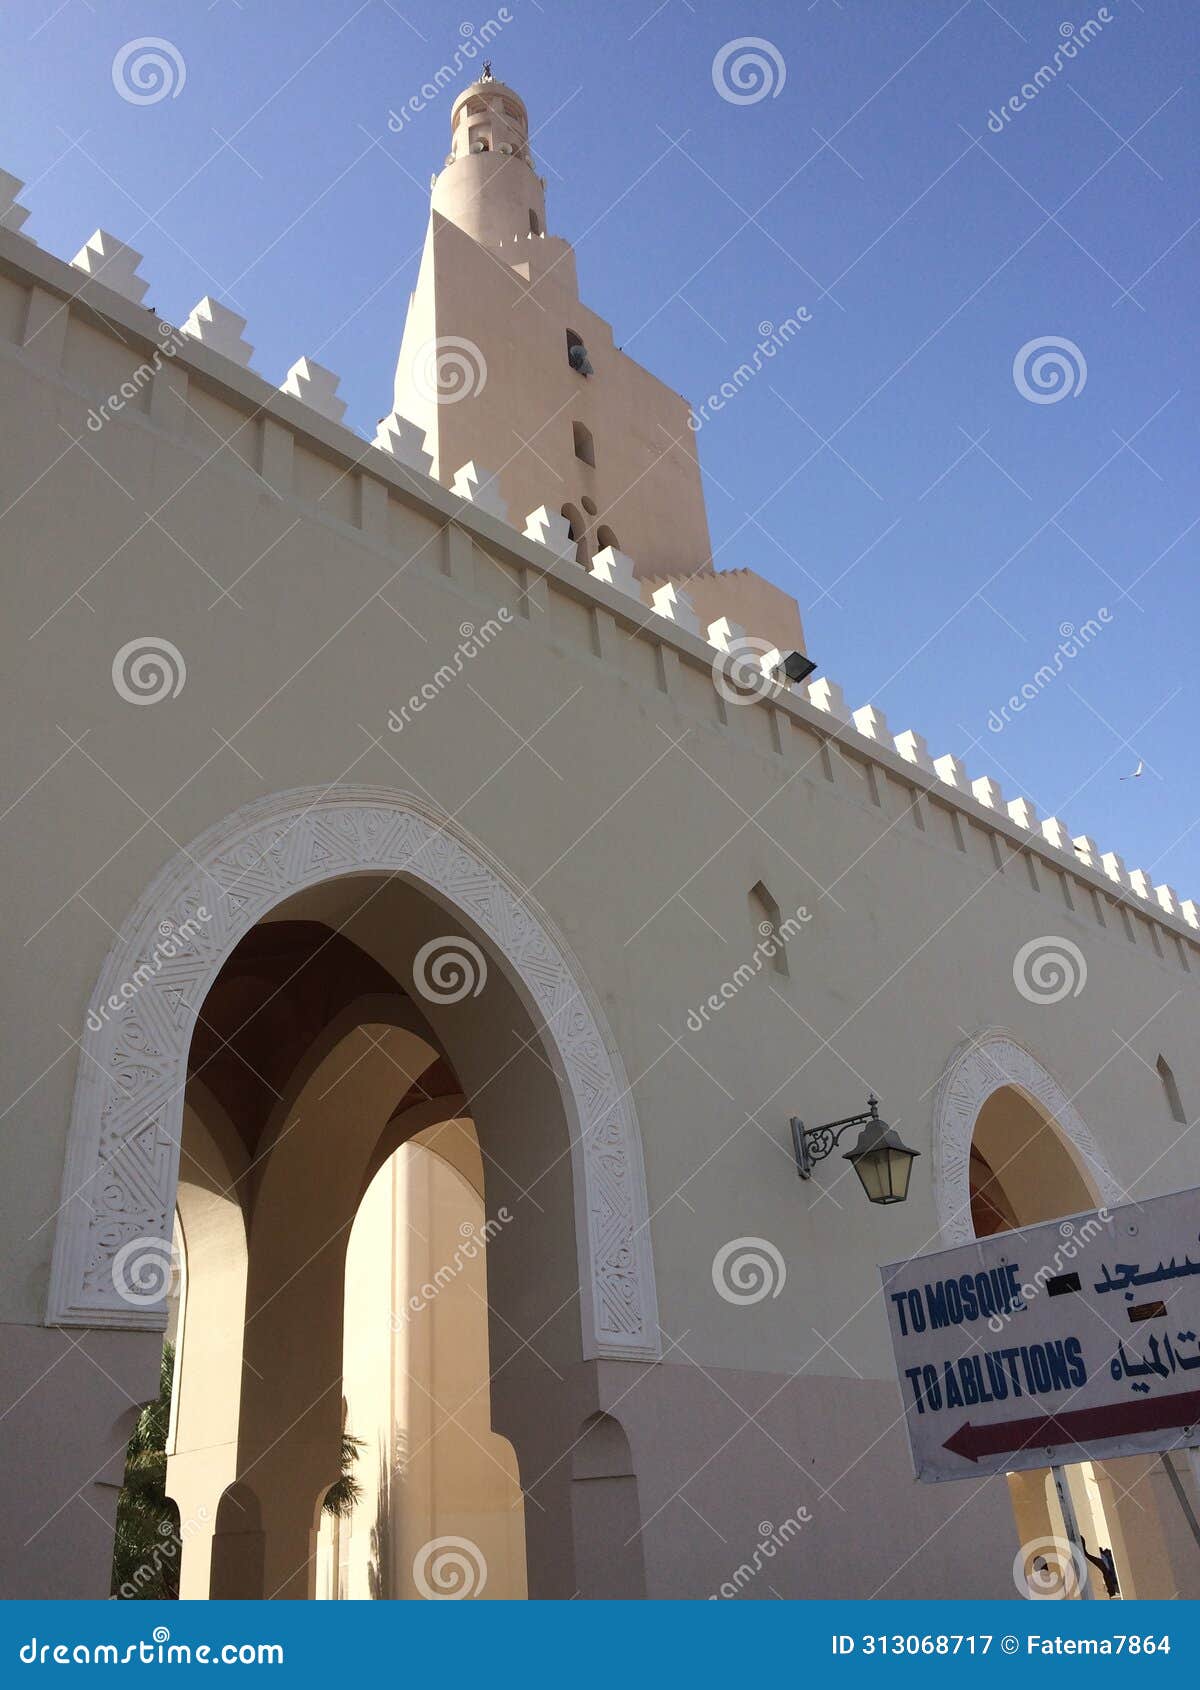 dawoodi bohra community mosque in medina - islamic sacred city of al madinah - religious tour